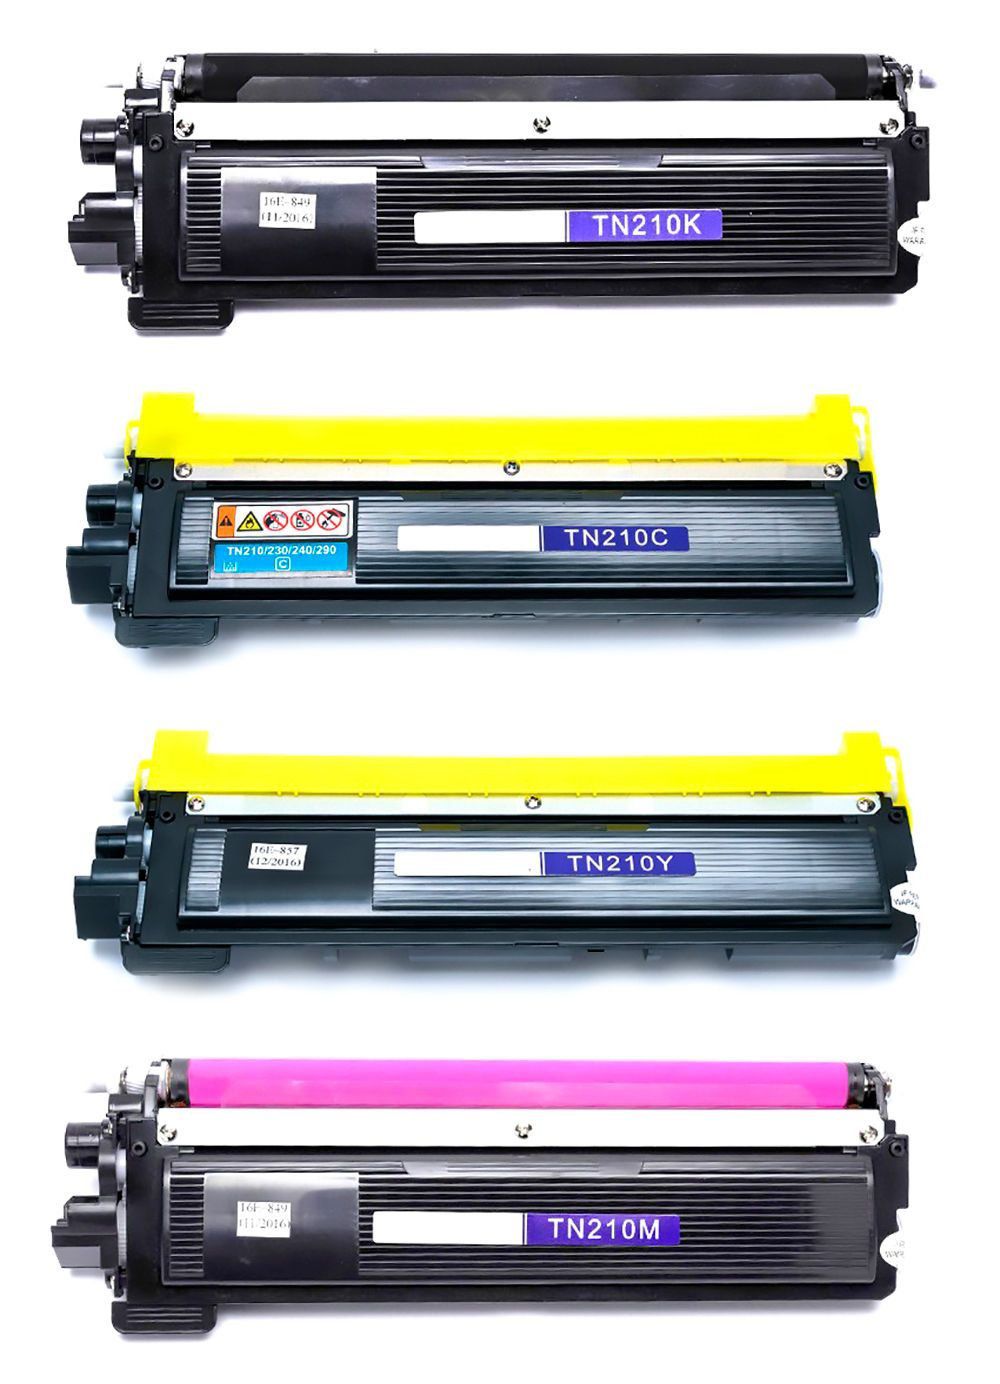 Kit Colorido Toner Compatível com TN210 para Brother HL-3040cn HL-3070cn HL-3045cn MFC-9120cn 9320cw 9010cn 8370cn